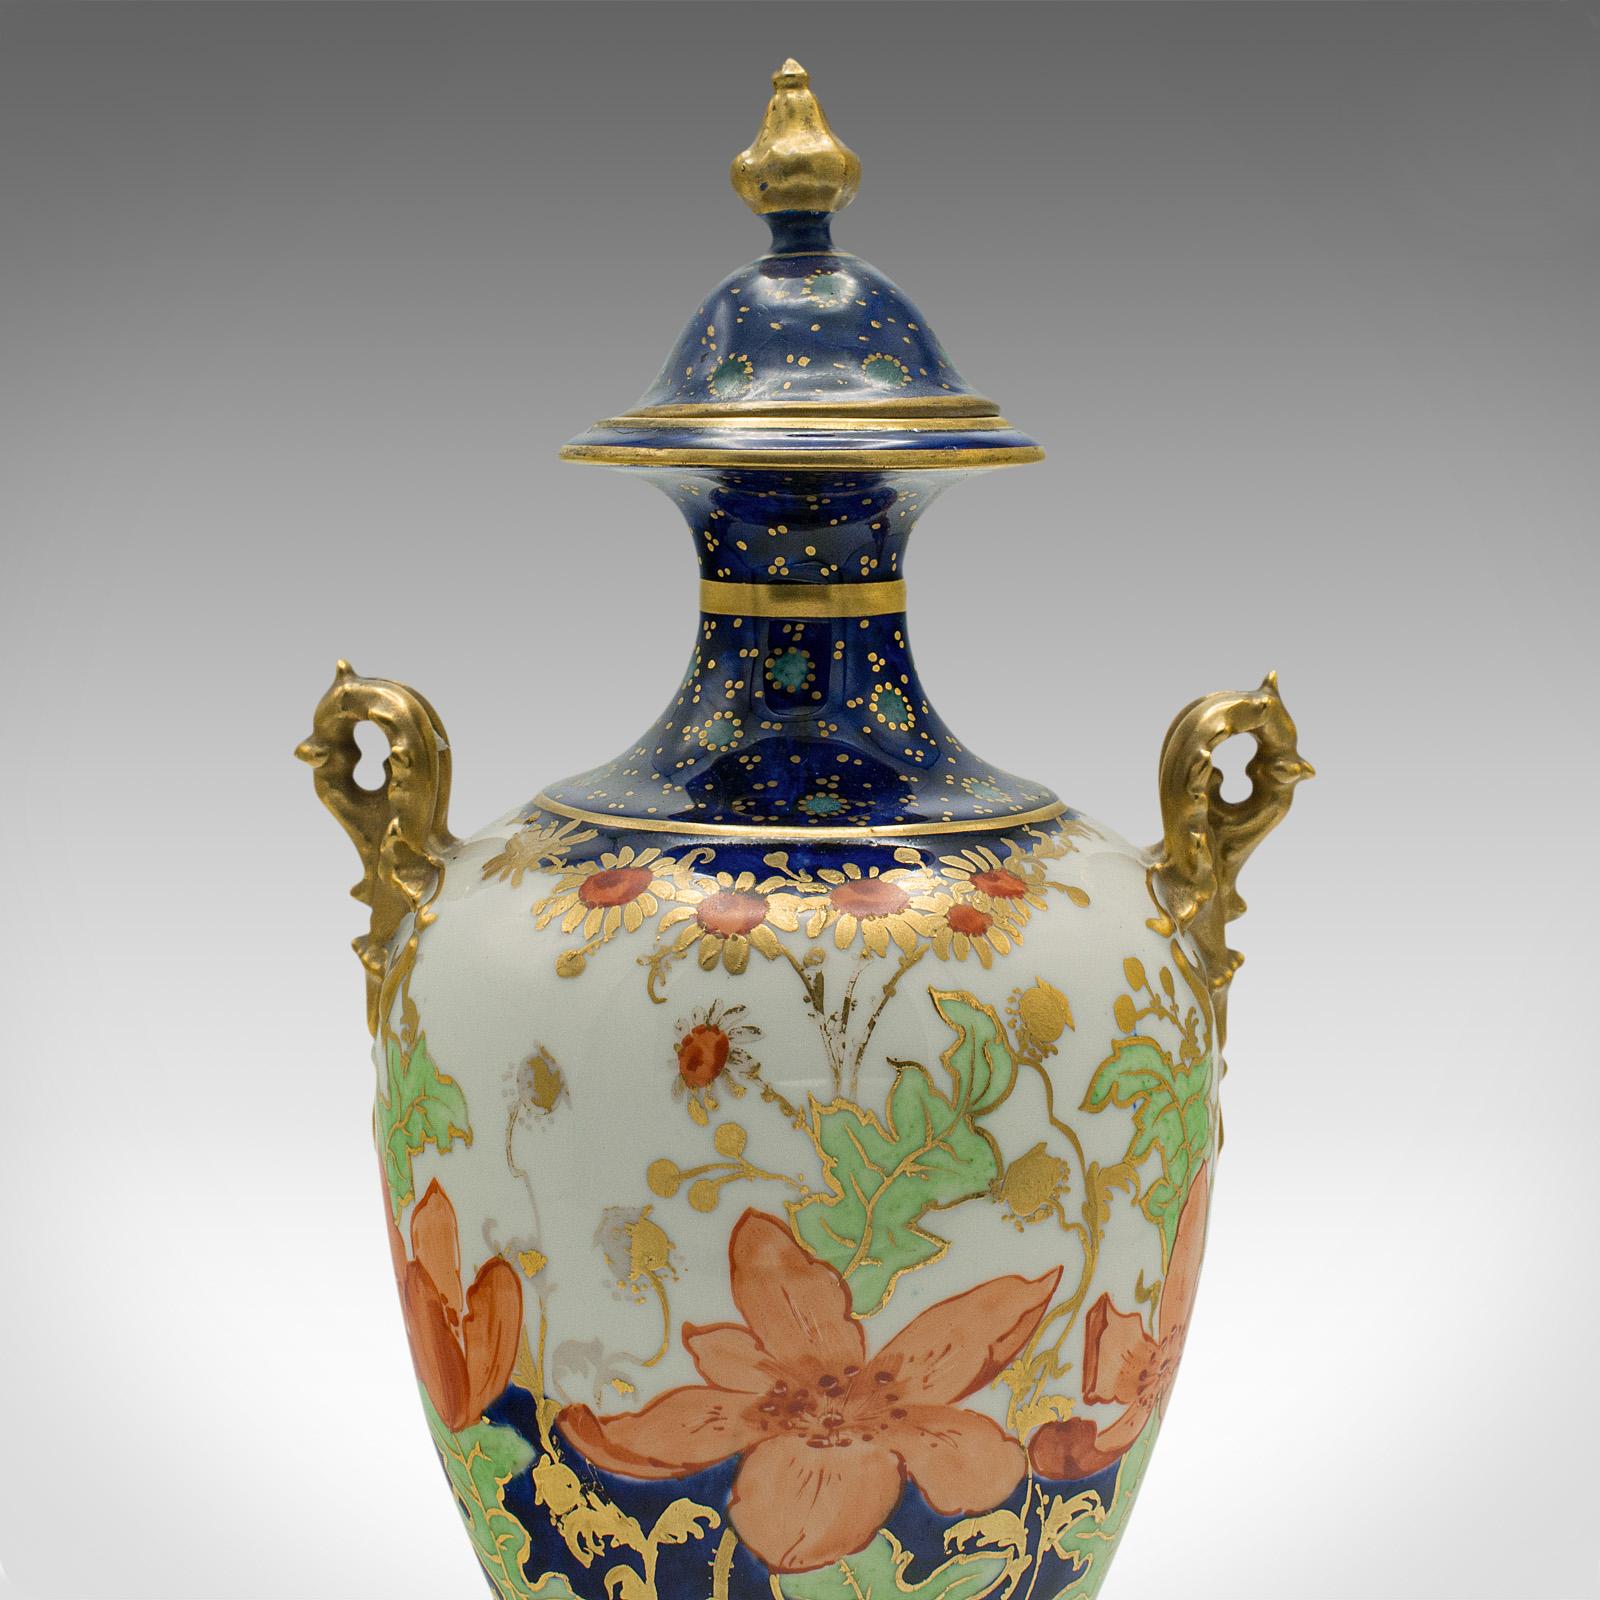 Small Antique Baluster Urn, English, Ceramic, Decorative Posy Vase, Victorian For Sale 3